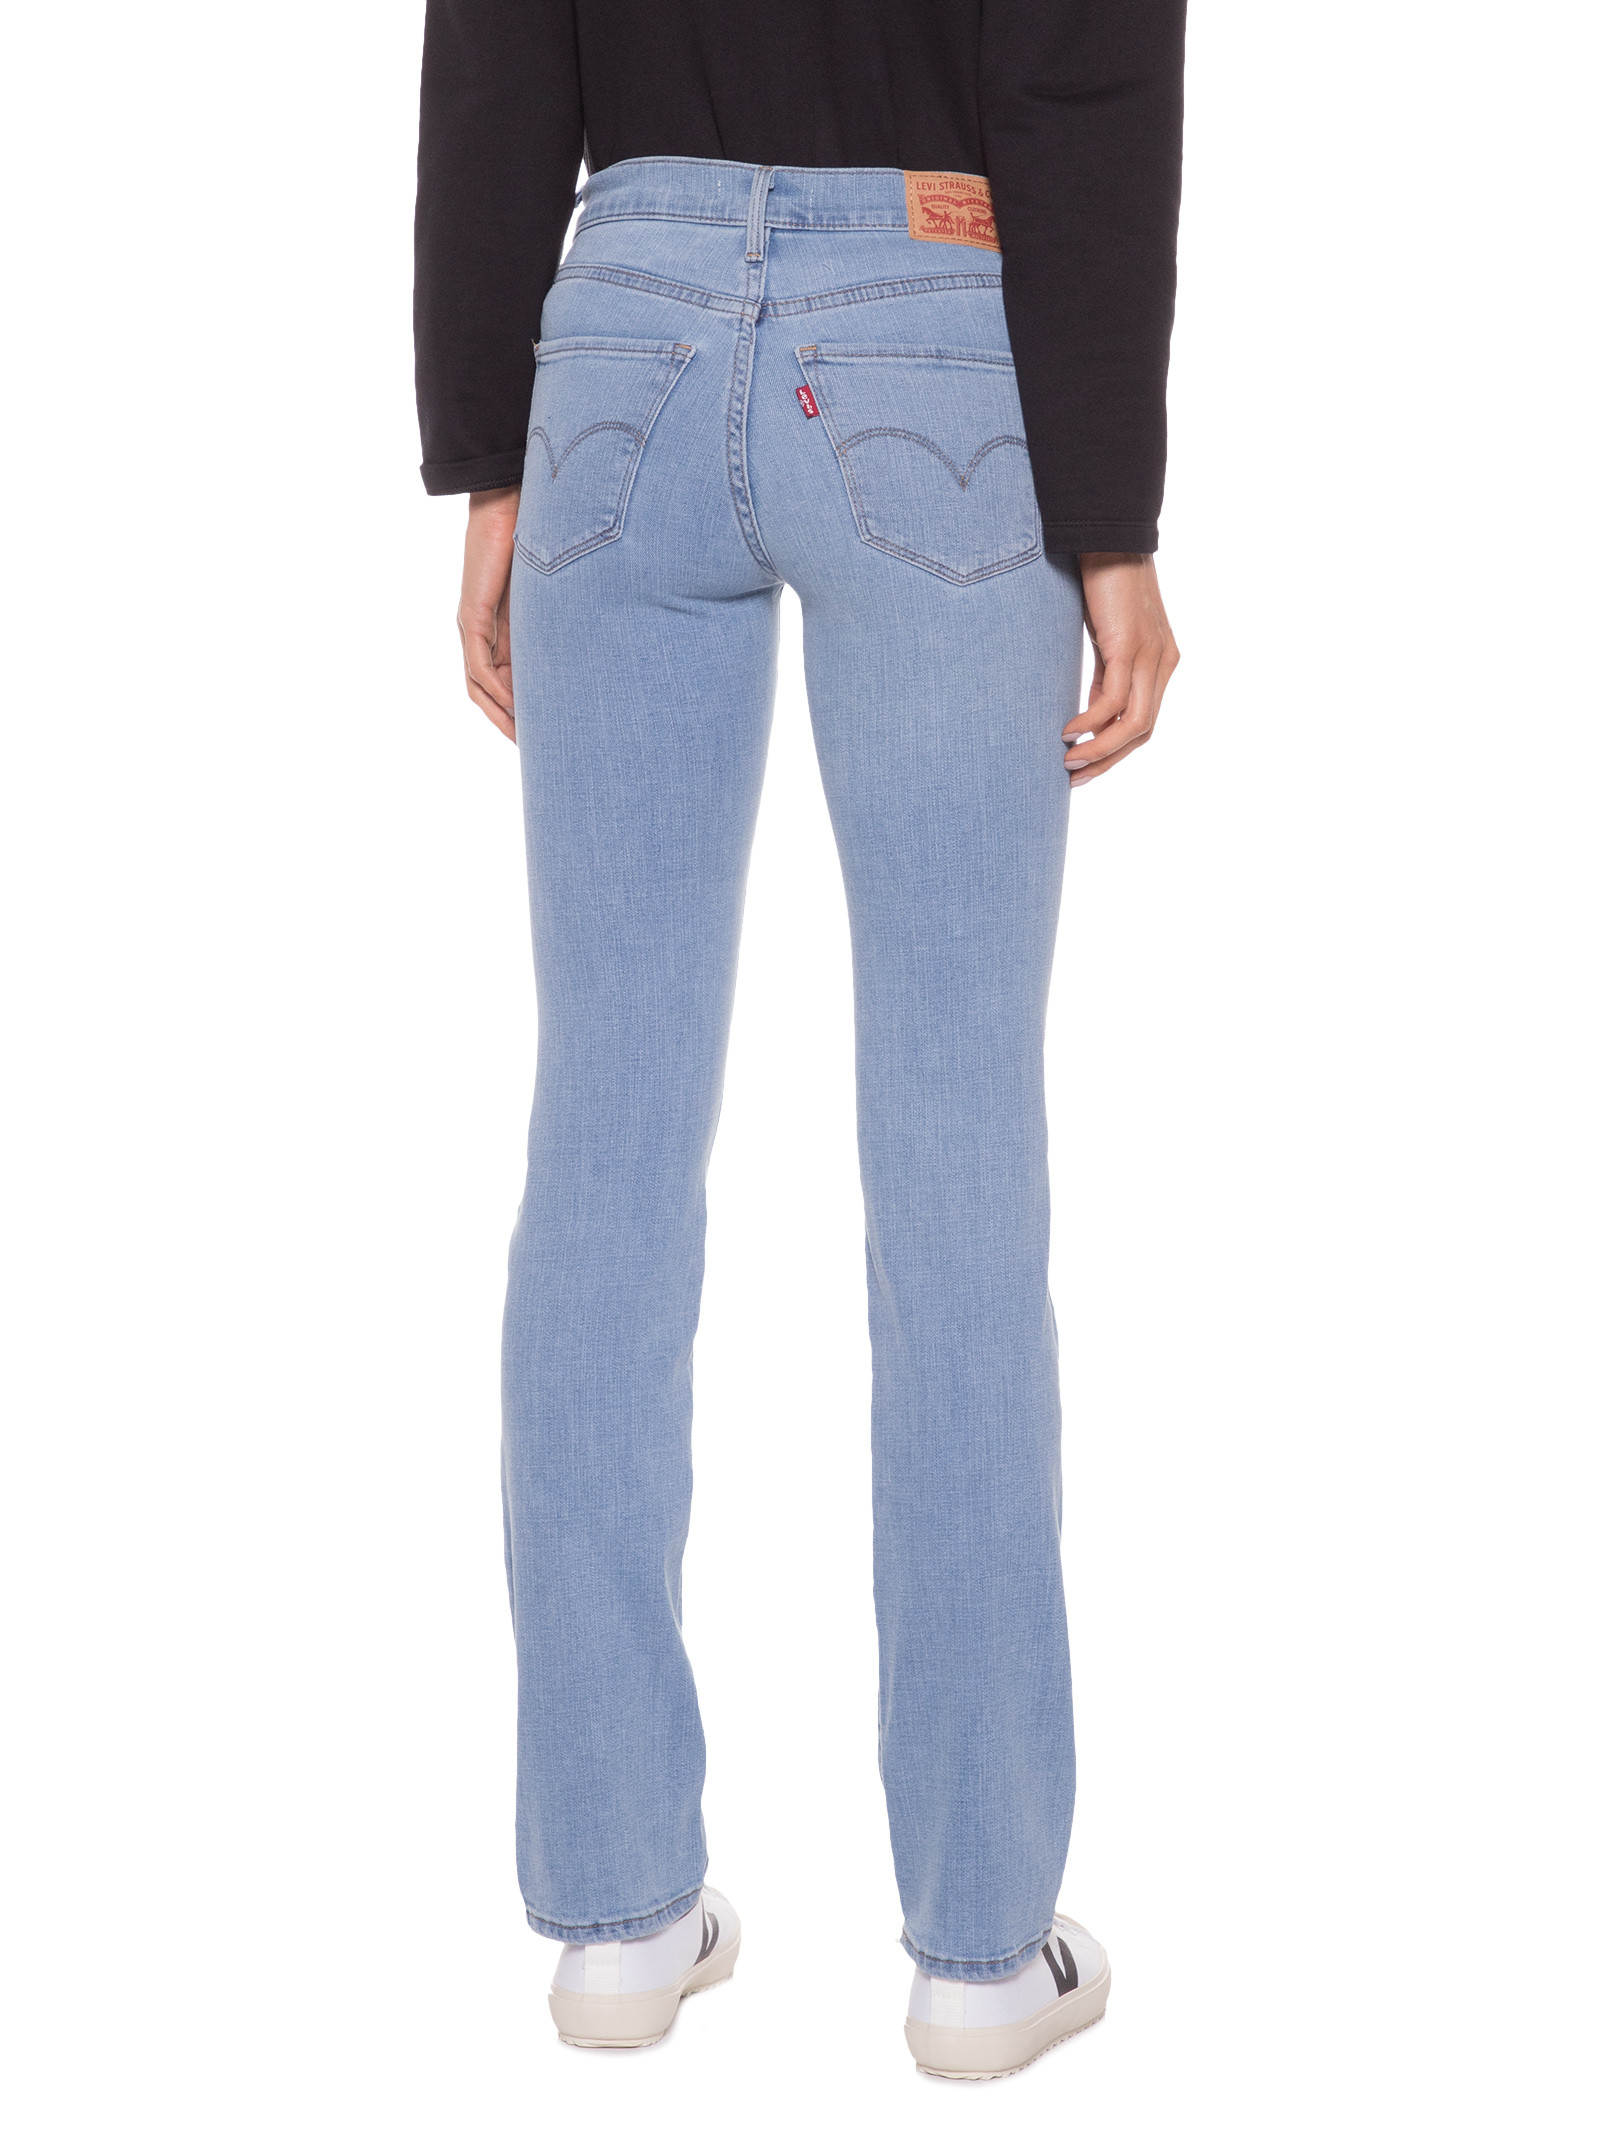 Calça Feminina Jeans 314 Shaping Straight - Levi's - Azul - Oqvestir